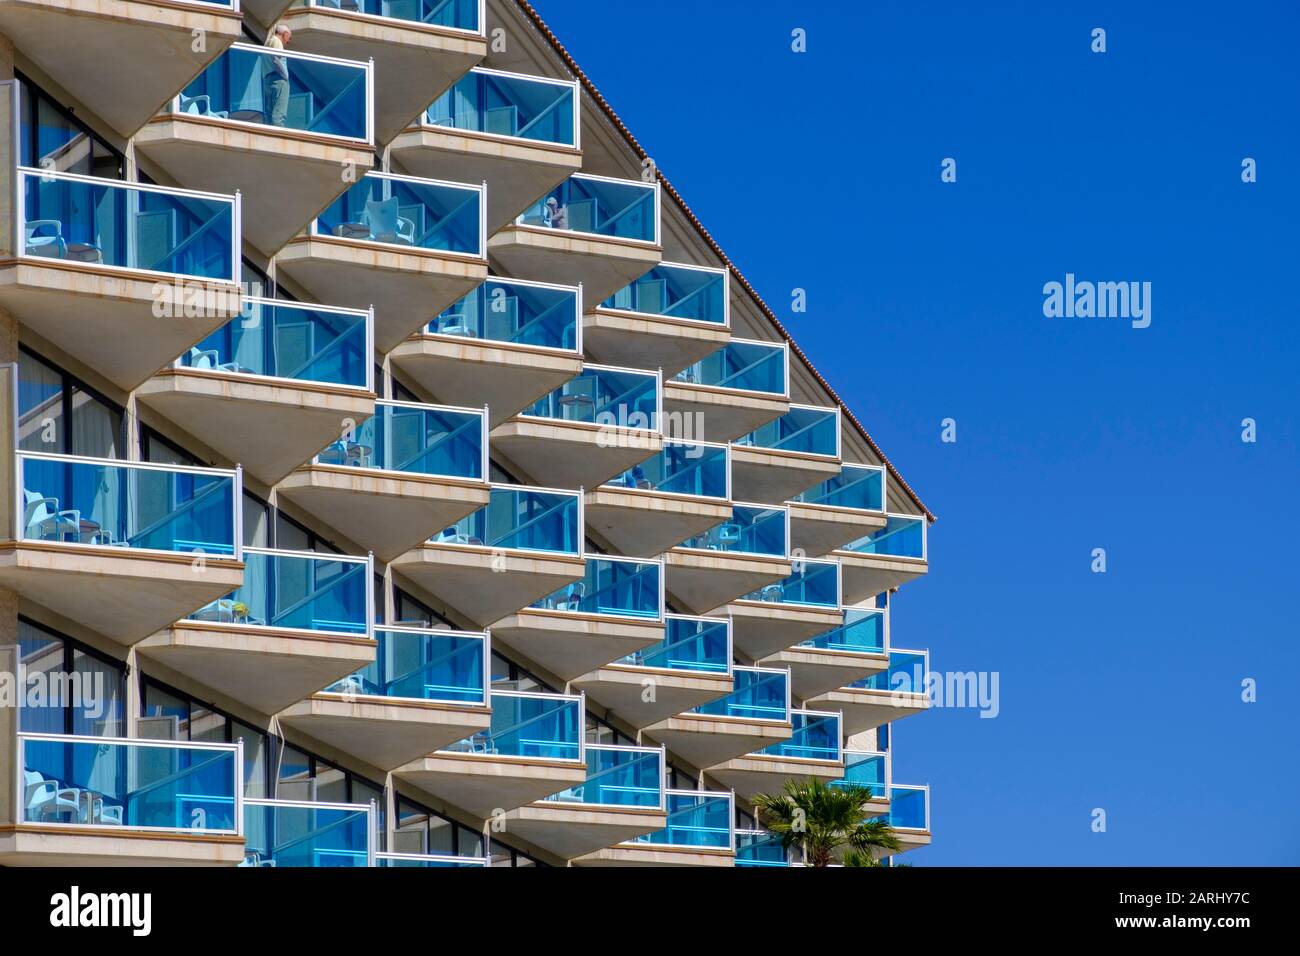 Balconies with blue glass railings, Hotel Kaktus, El Albir, l’Alfas del Pi, Alicante, Spanien Stock Photo